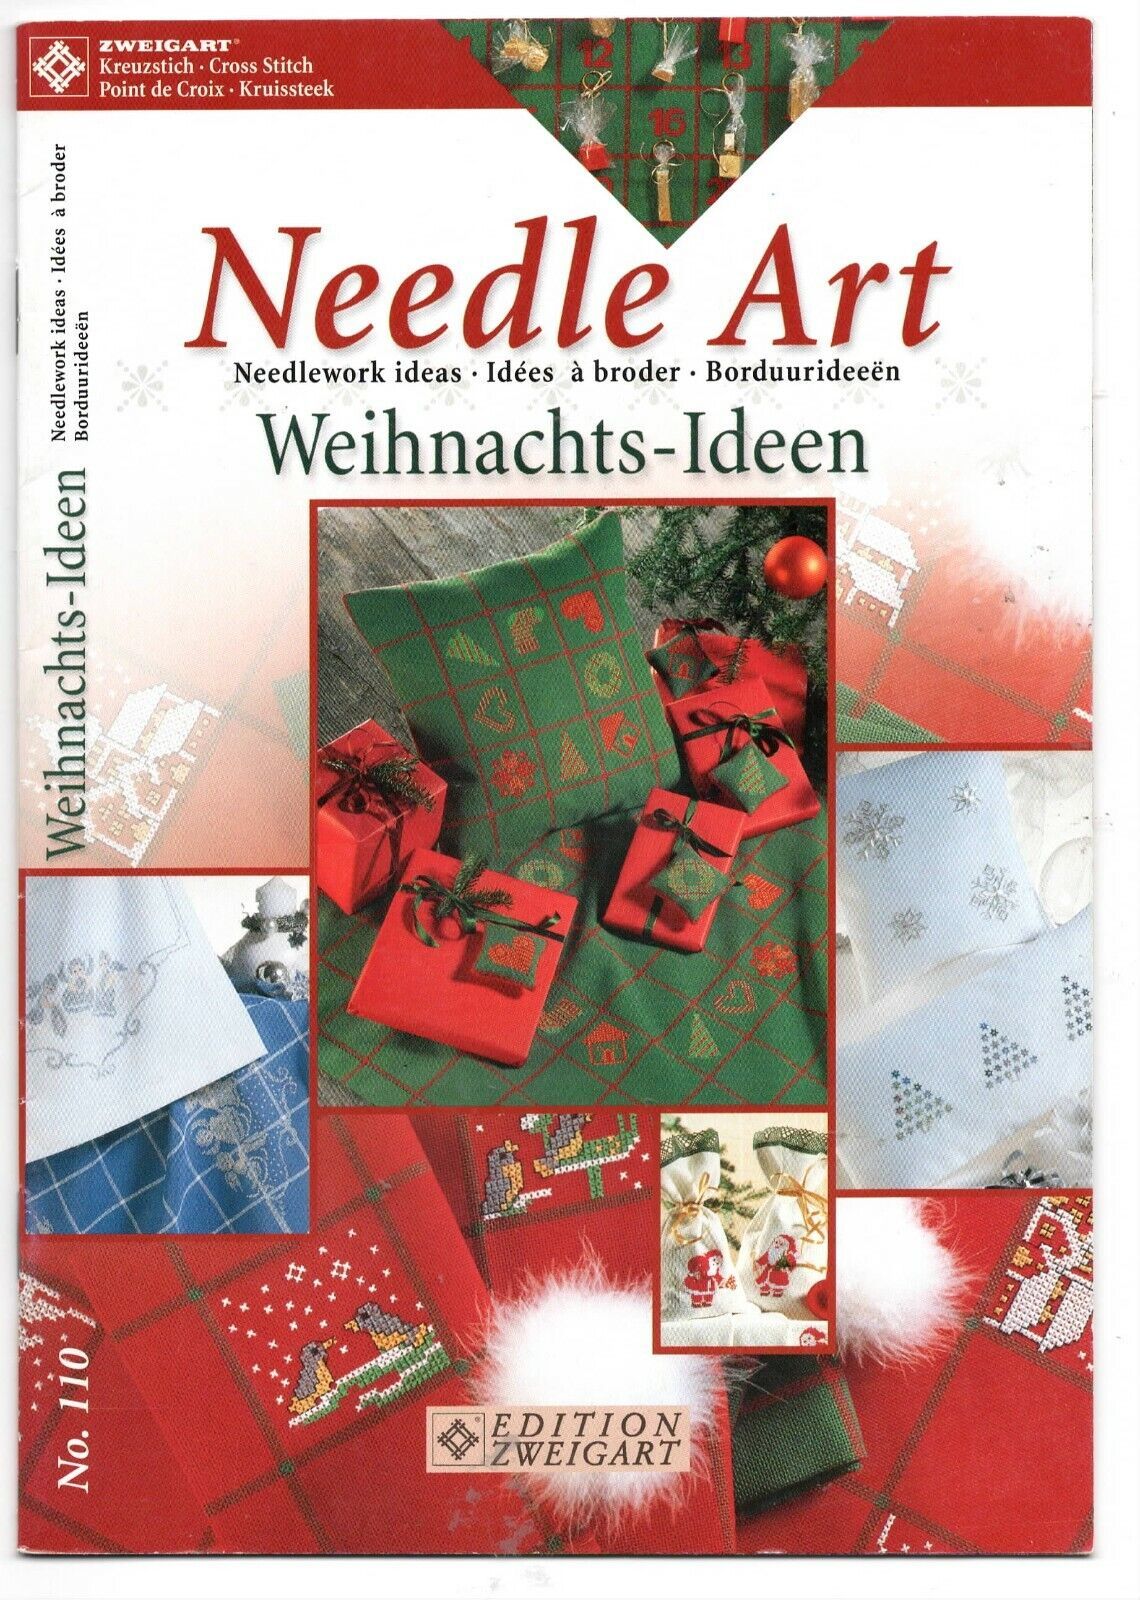 ZWEIGART Needle Art Christmas Cross Stitch Pattern Idea Book No 110 - $19.67